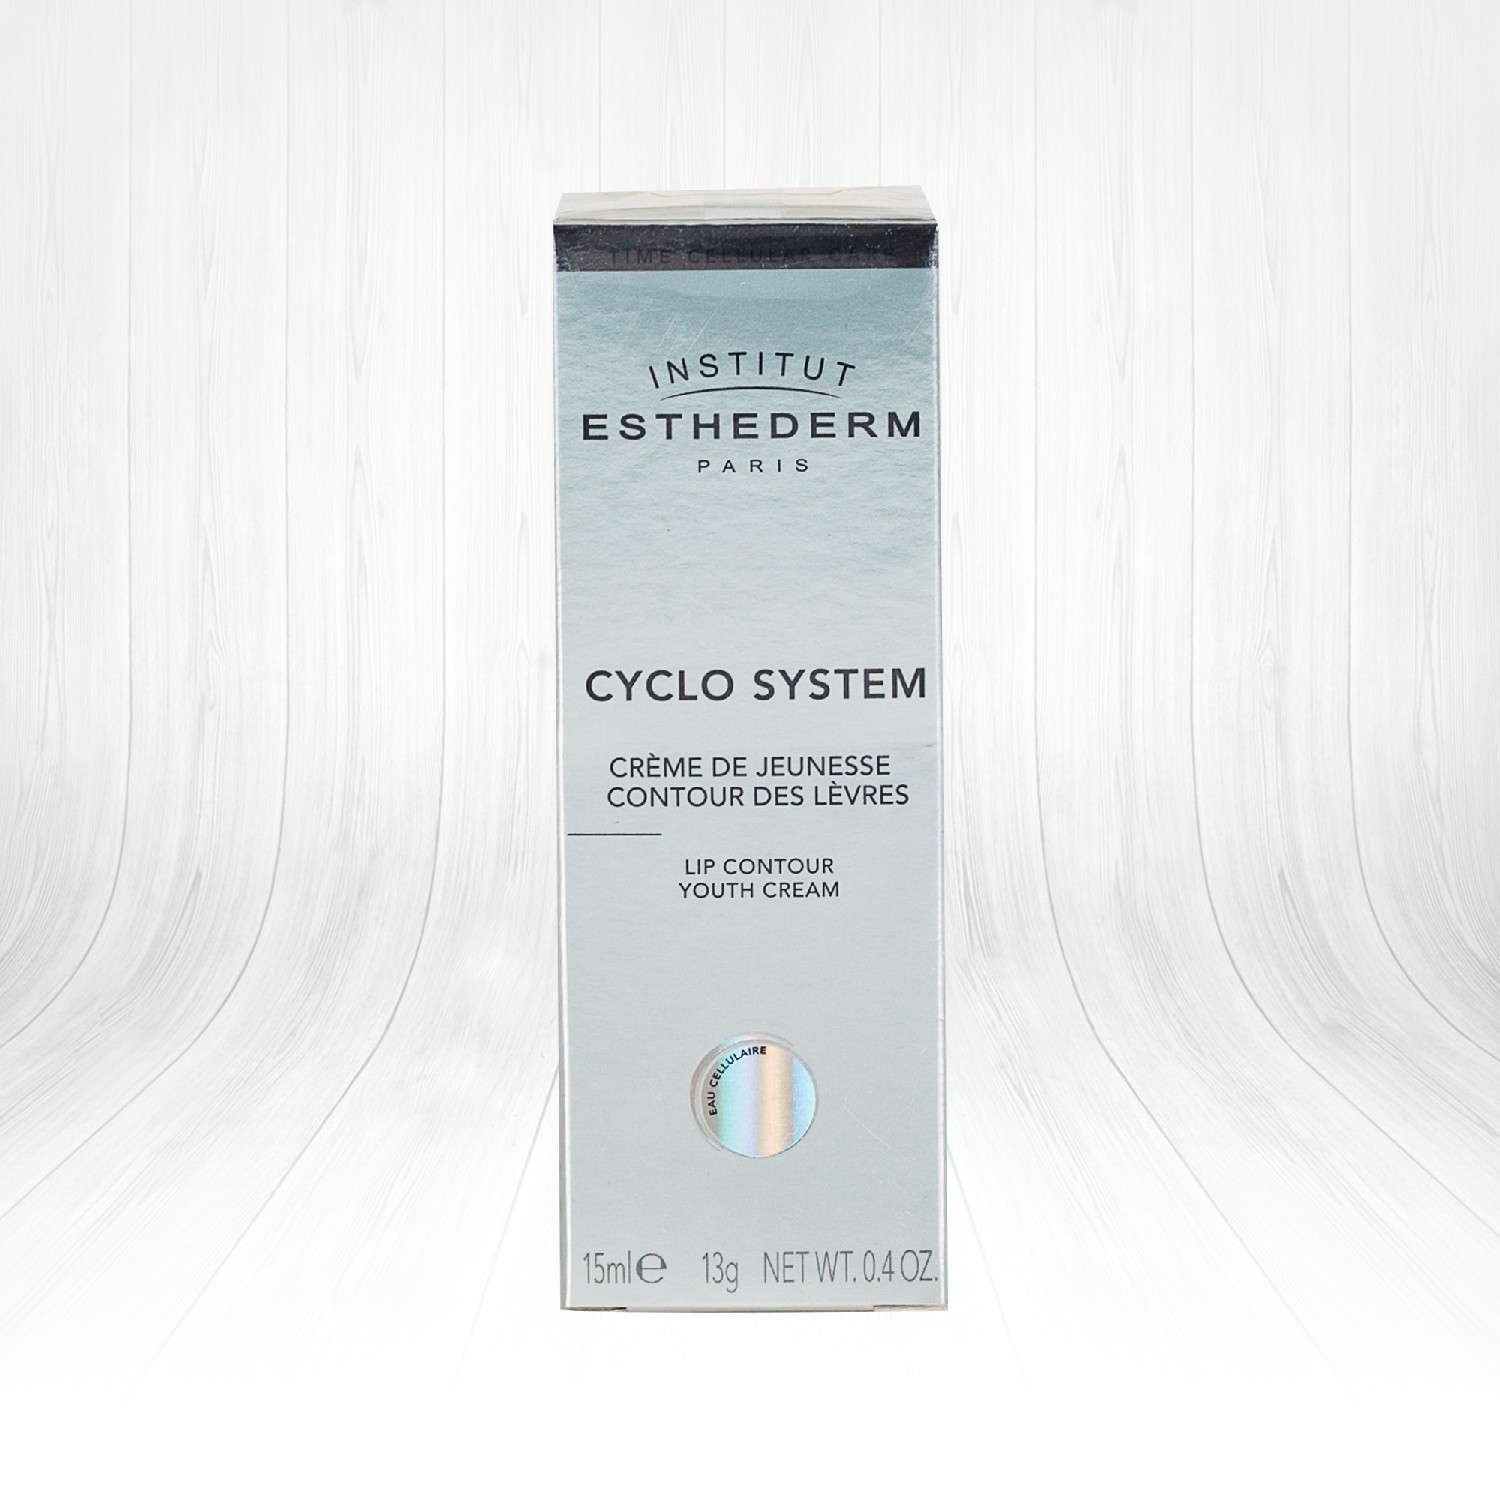 Esthederm Cyclo System Lip Contour Youth Cream